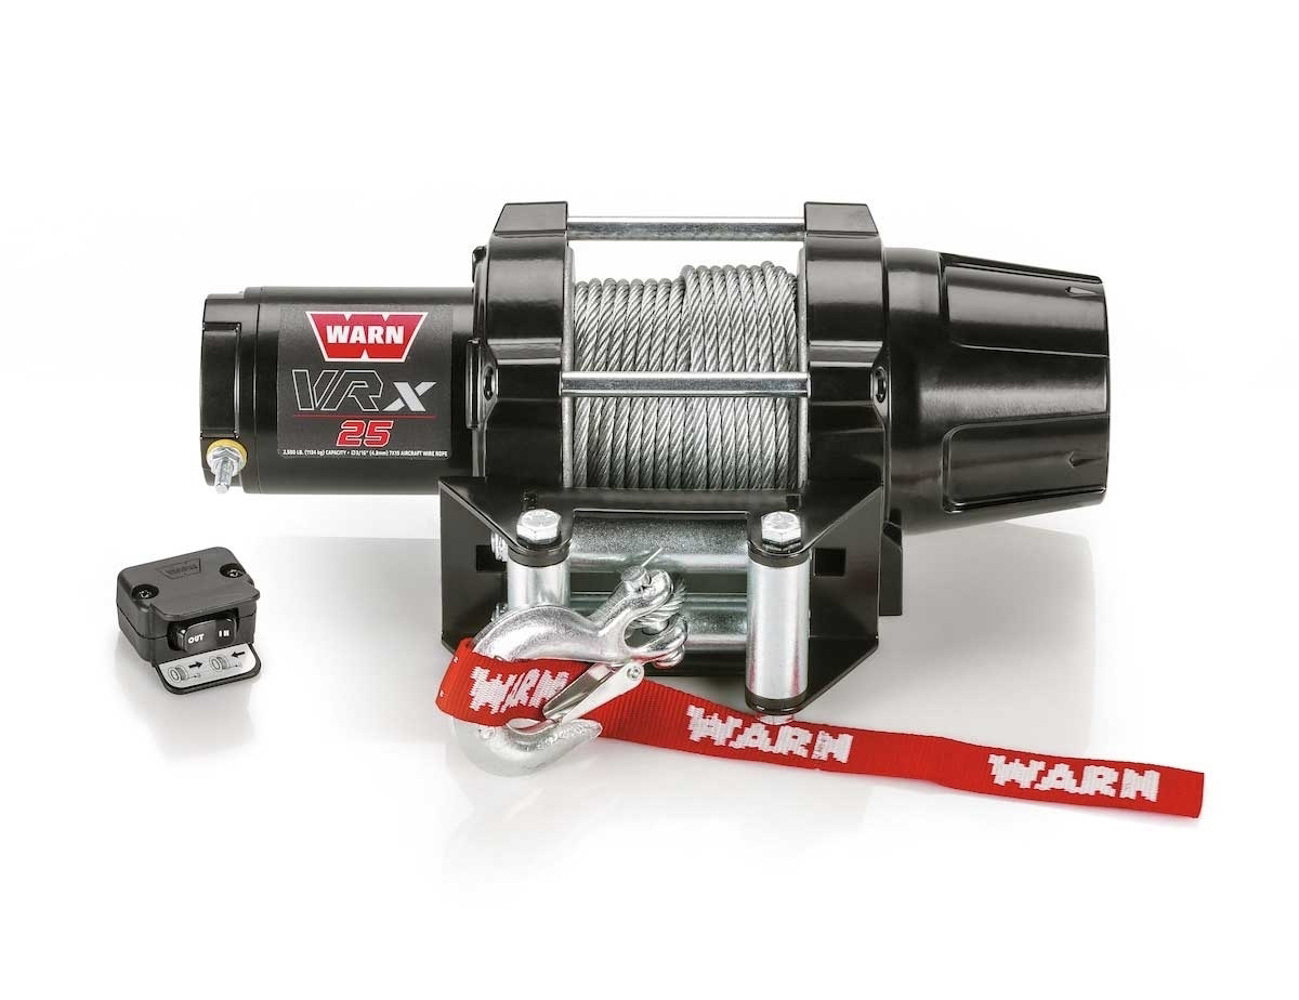 Warn 101025 Winch, VRX 25, 2500 lb Capacity, Roller Fairlead, Handlebar Switch, 3/16 in x 50 ft Steel Rope, 12V, Kit